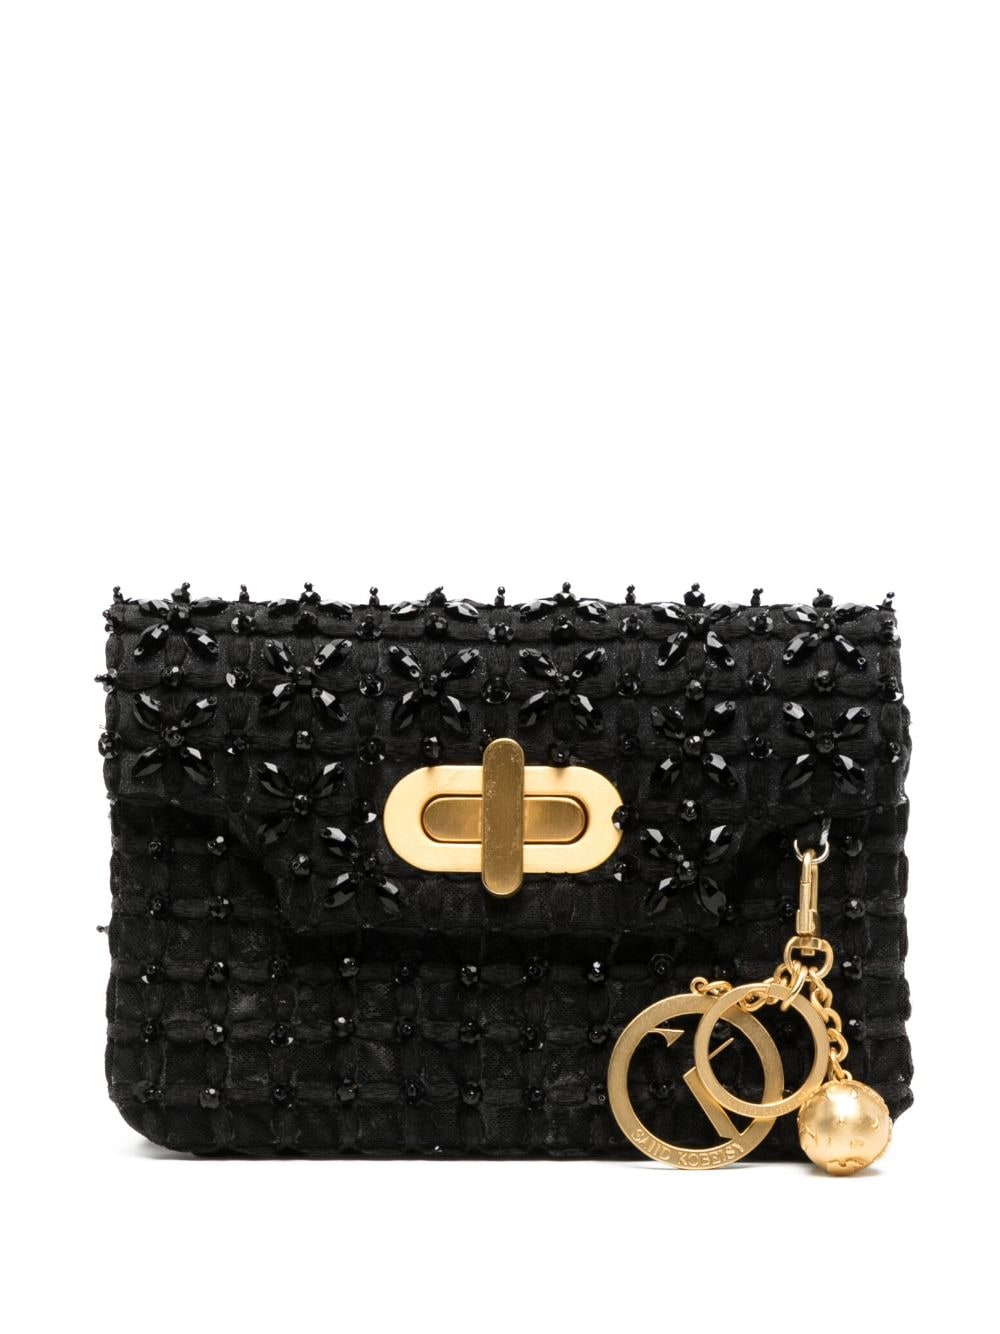 Saiid Kobeisy crystal-embellished clutch bag - Black von Saiid Kobeisy